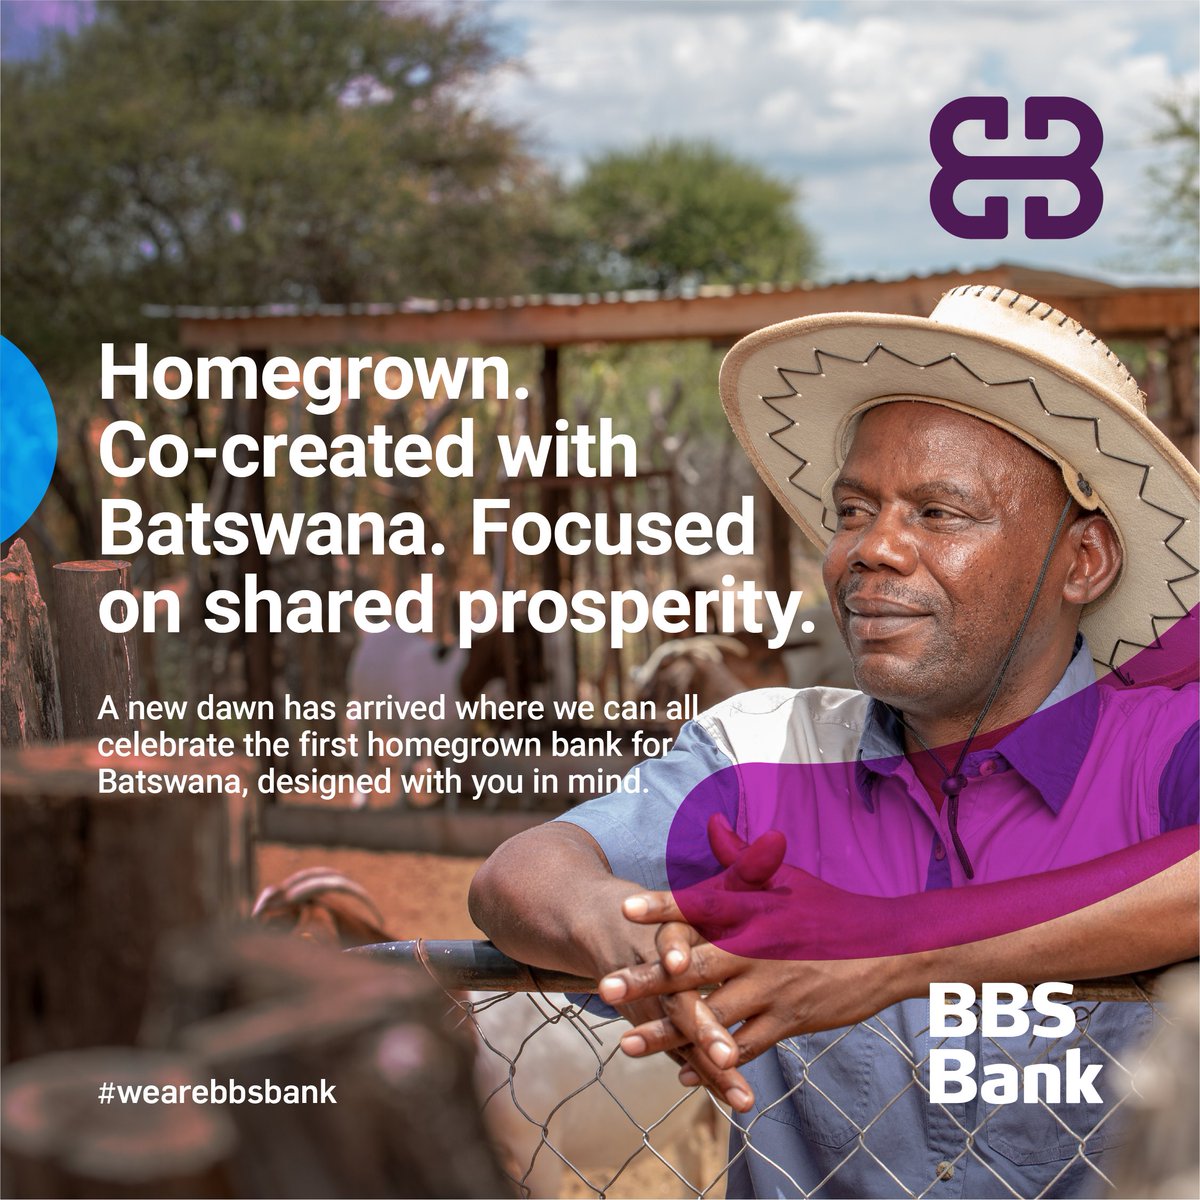 Homegrown. Co-created with Batswana
#sharedprosperity
#forbotswanabybatswana
#BBSBank
#howfarcanwego